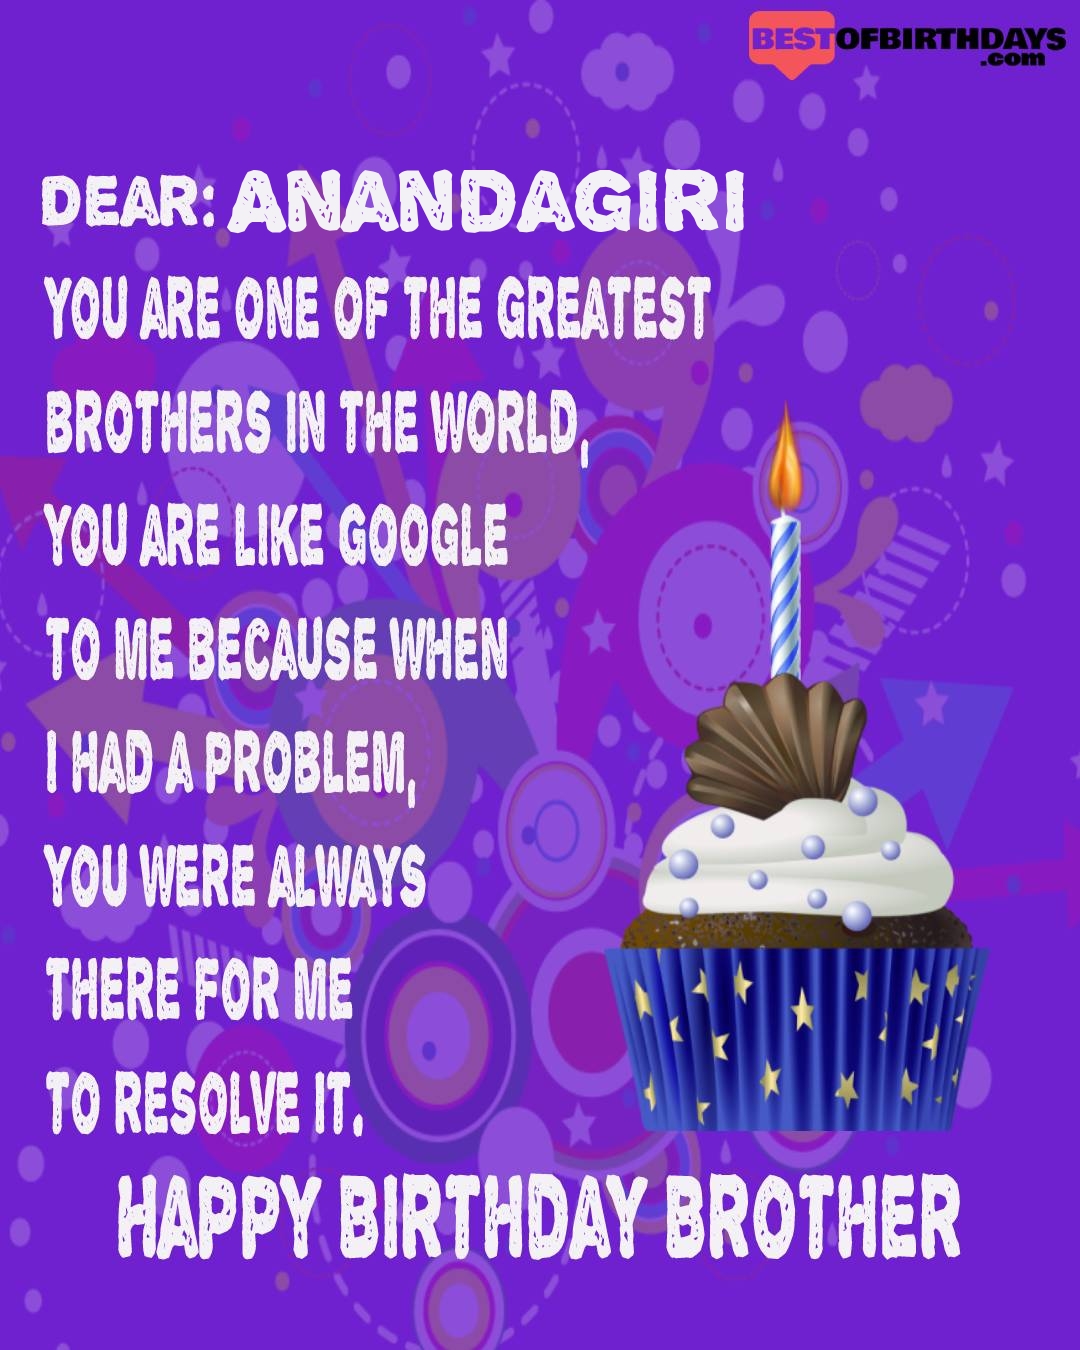 Happy birthday anandagiri bhai brother bro